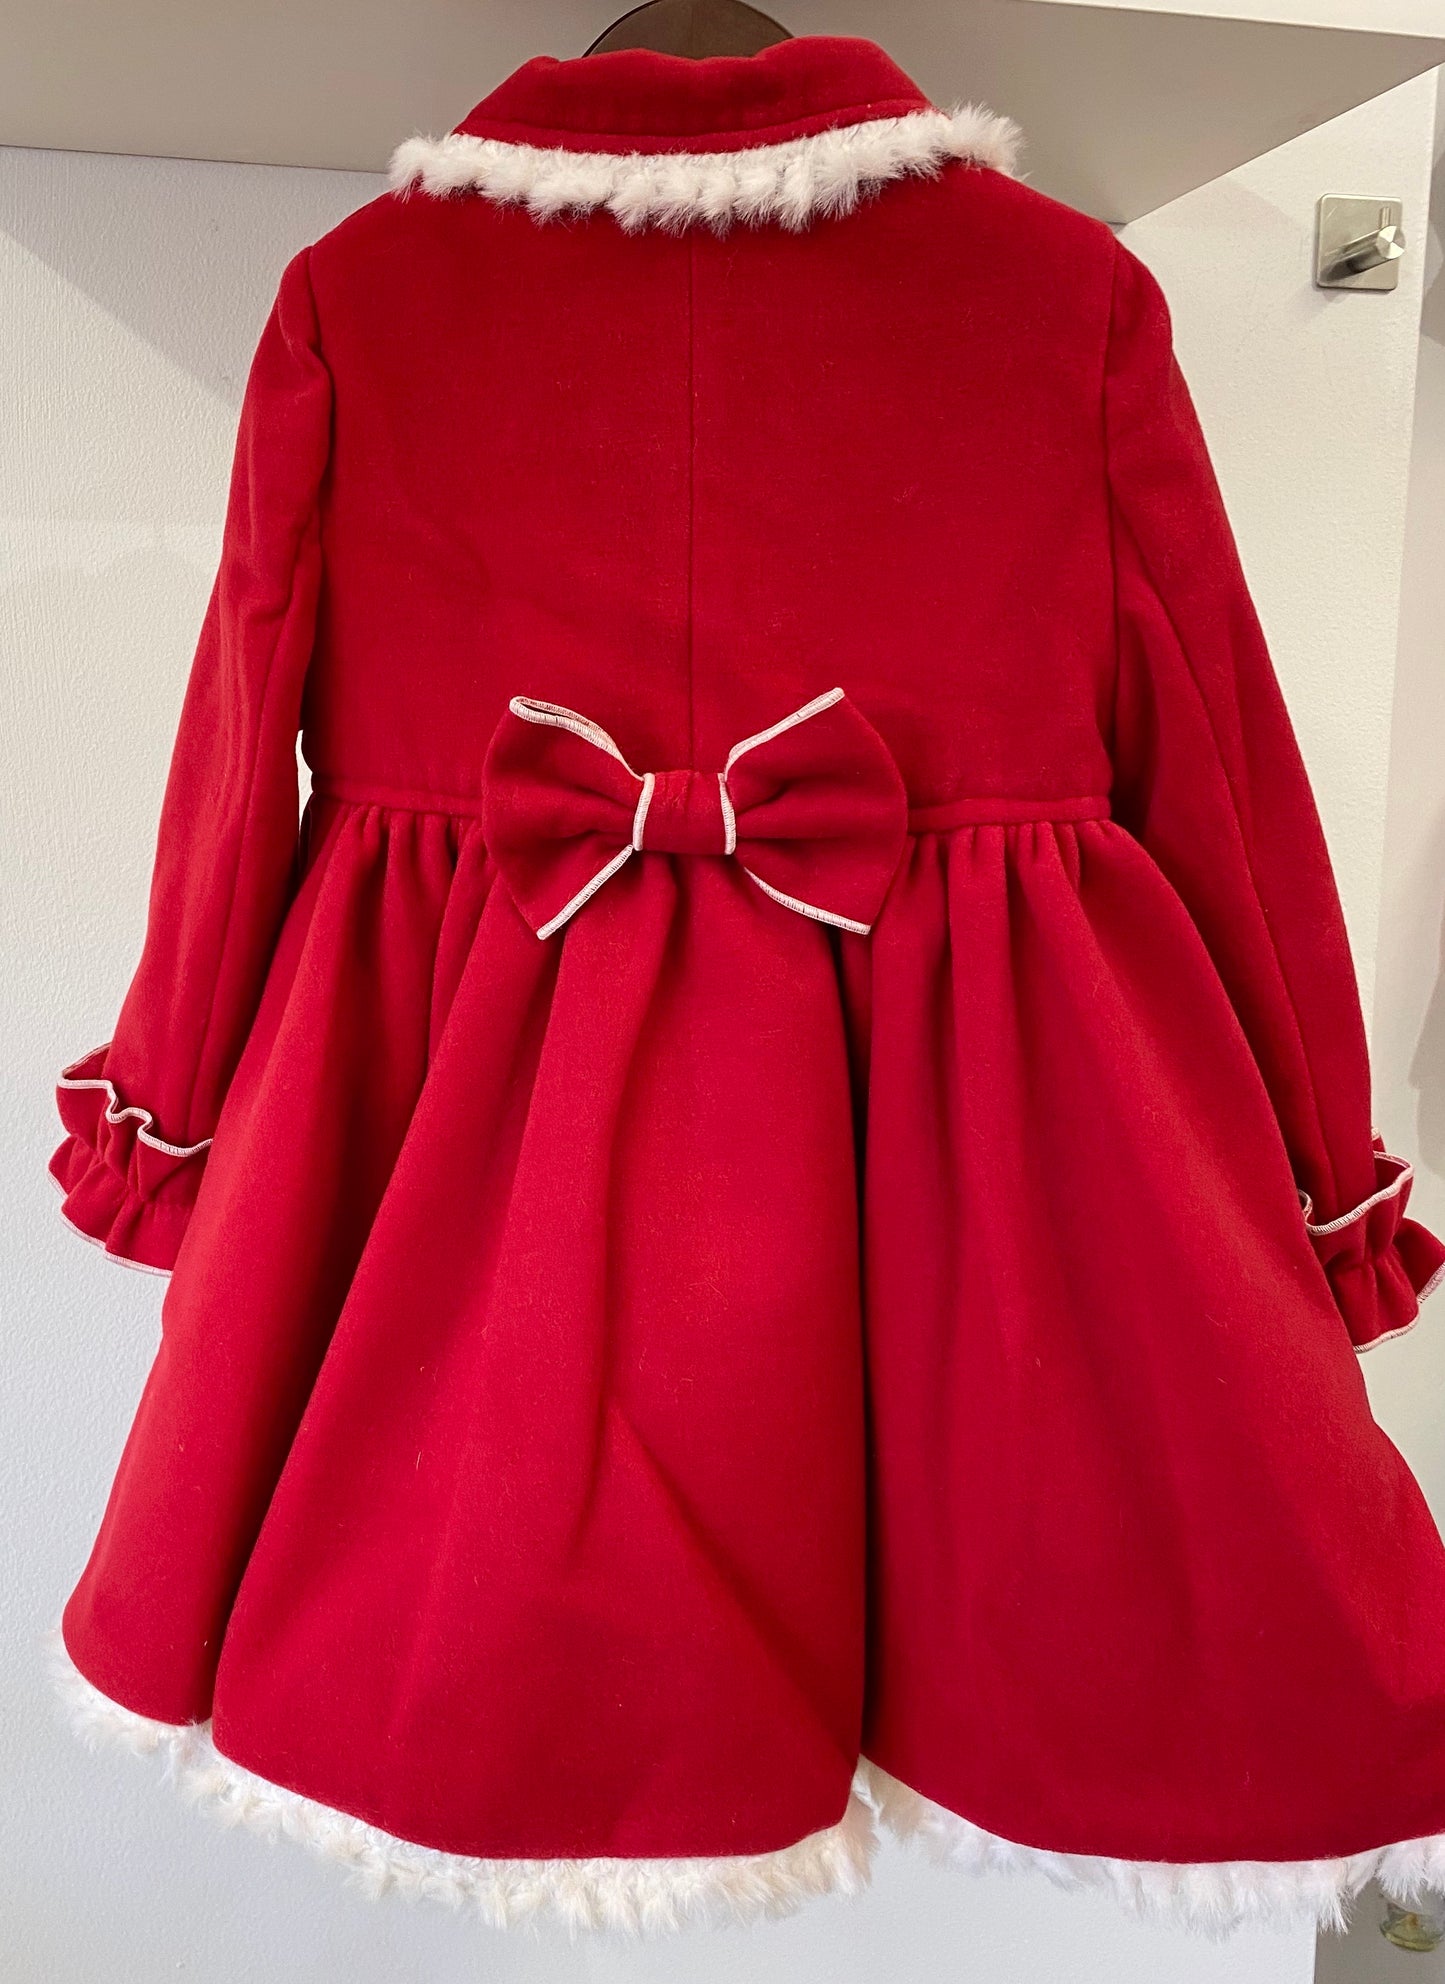 Sonata Valeria Coat in Red and White